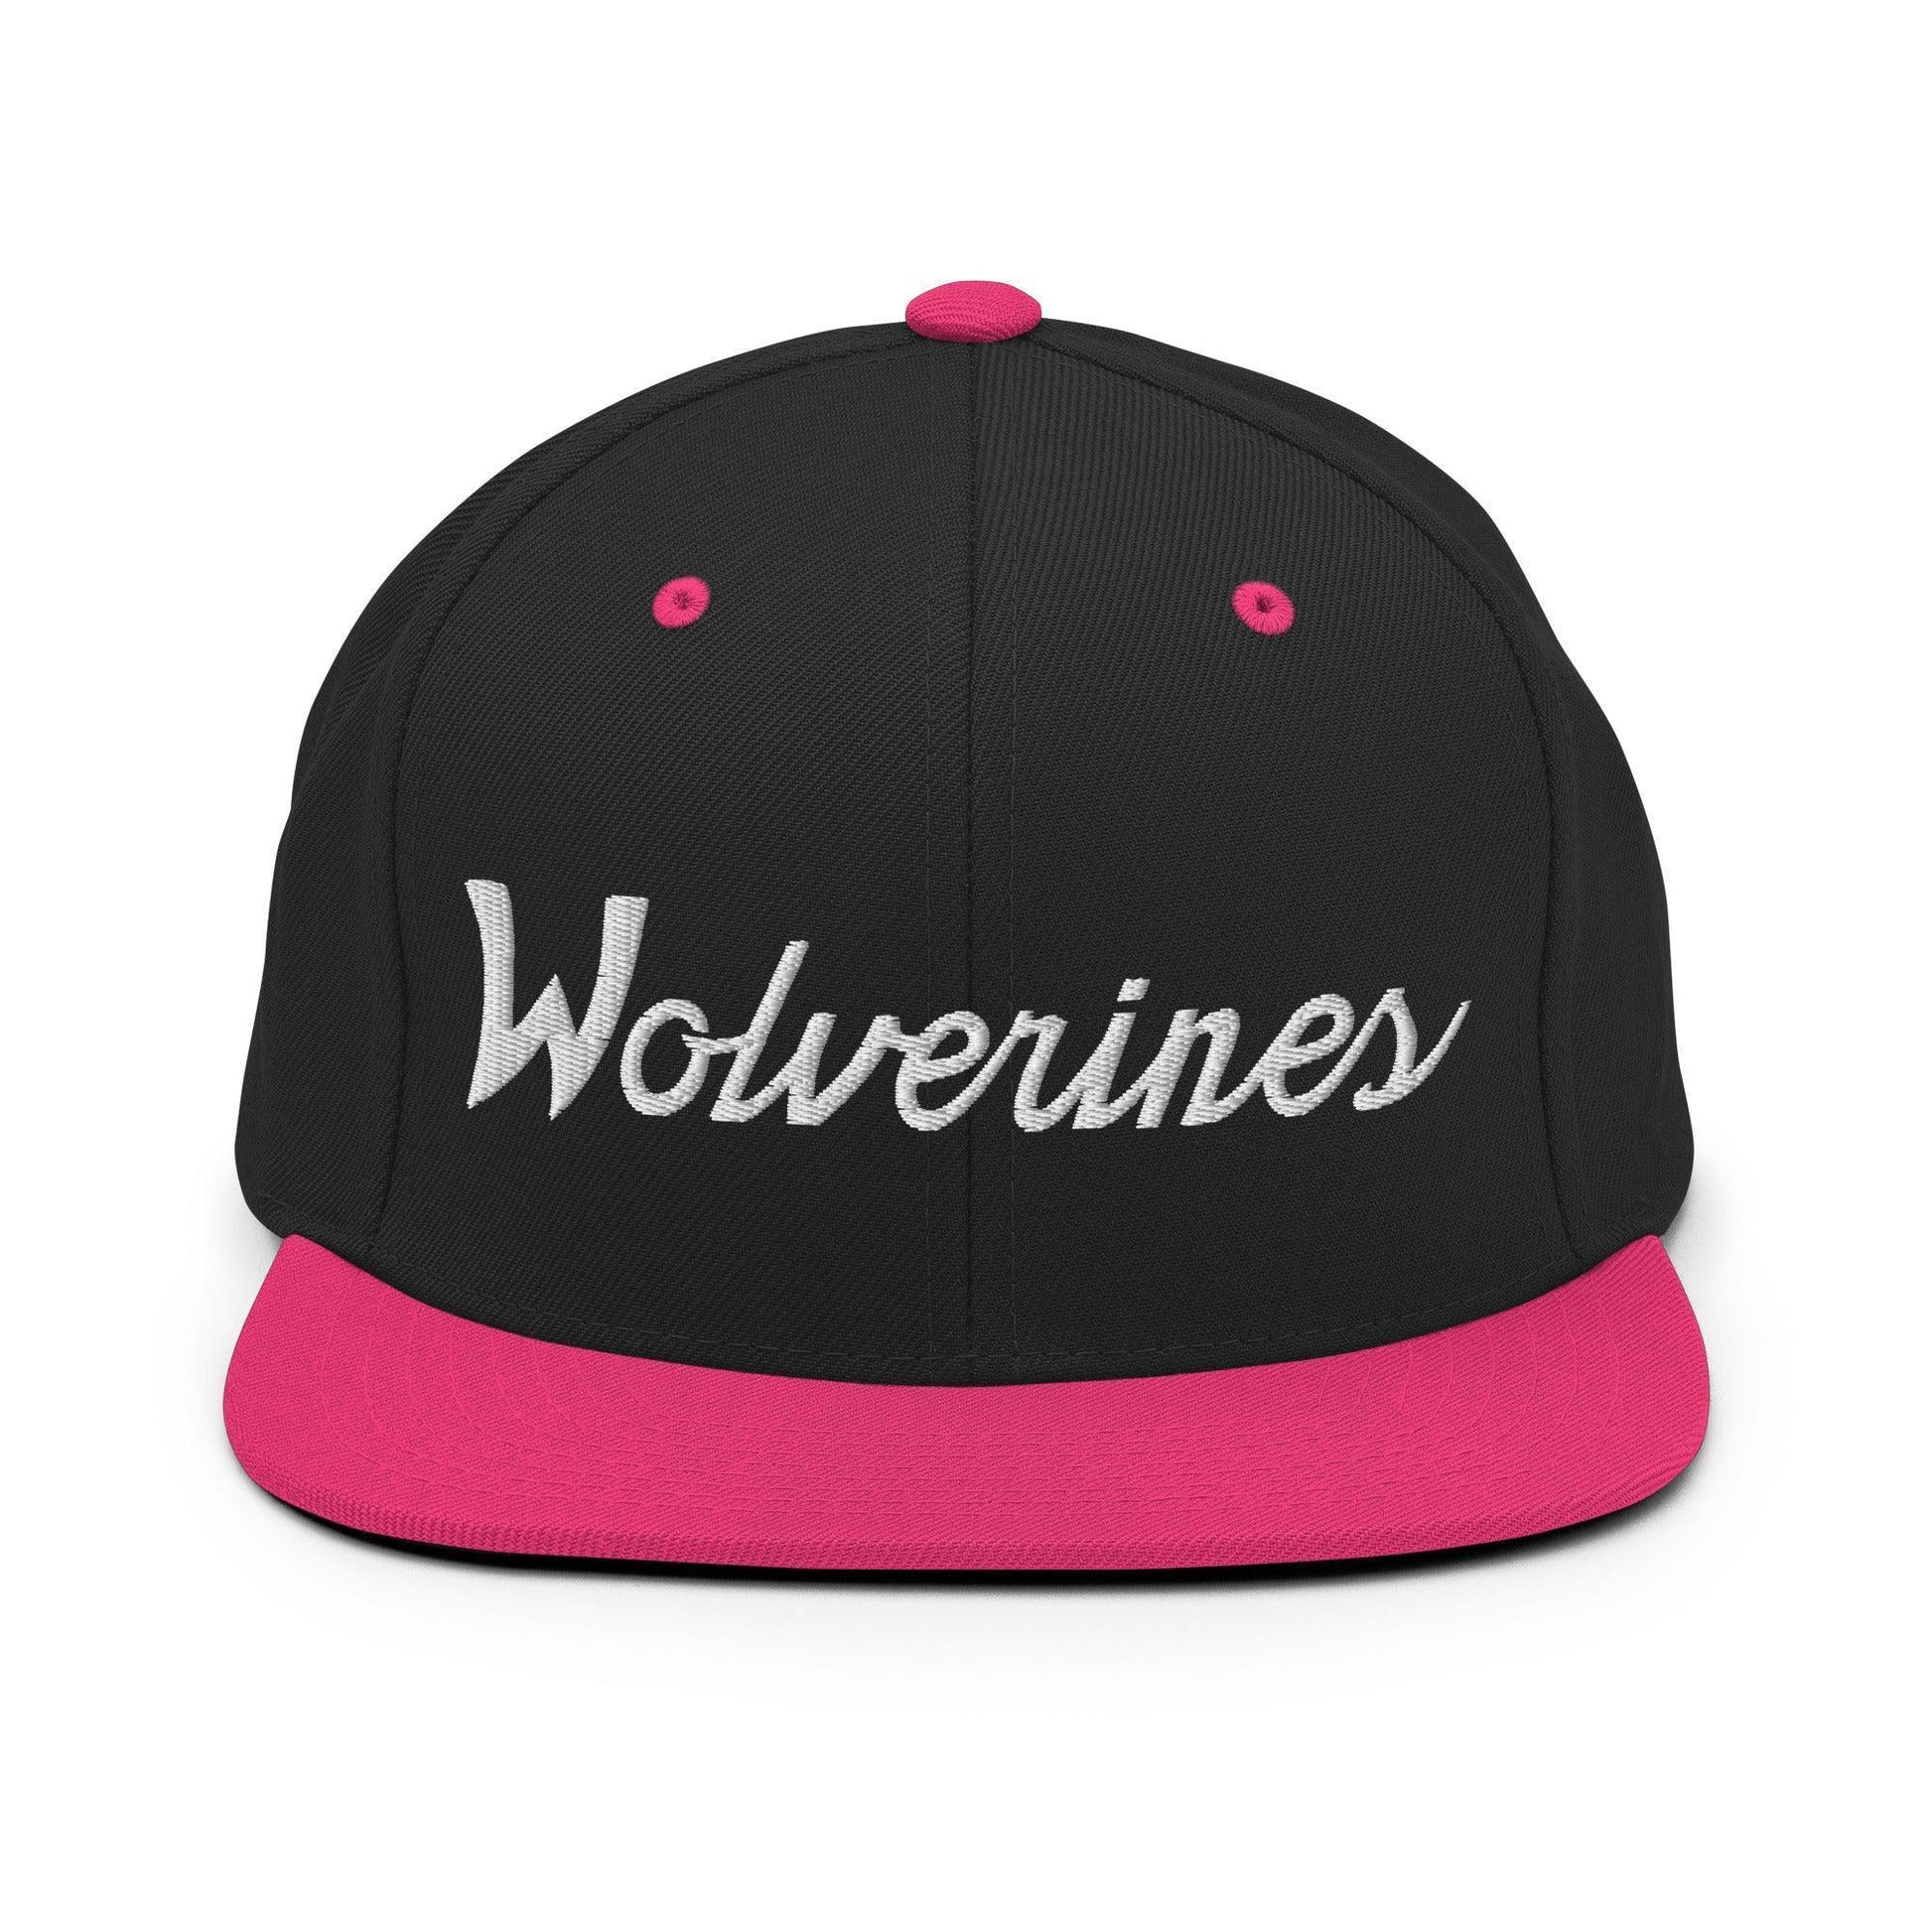 Wolverines School Mascot Script Snapback Hat Black/ Neon Pink